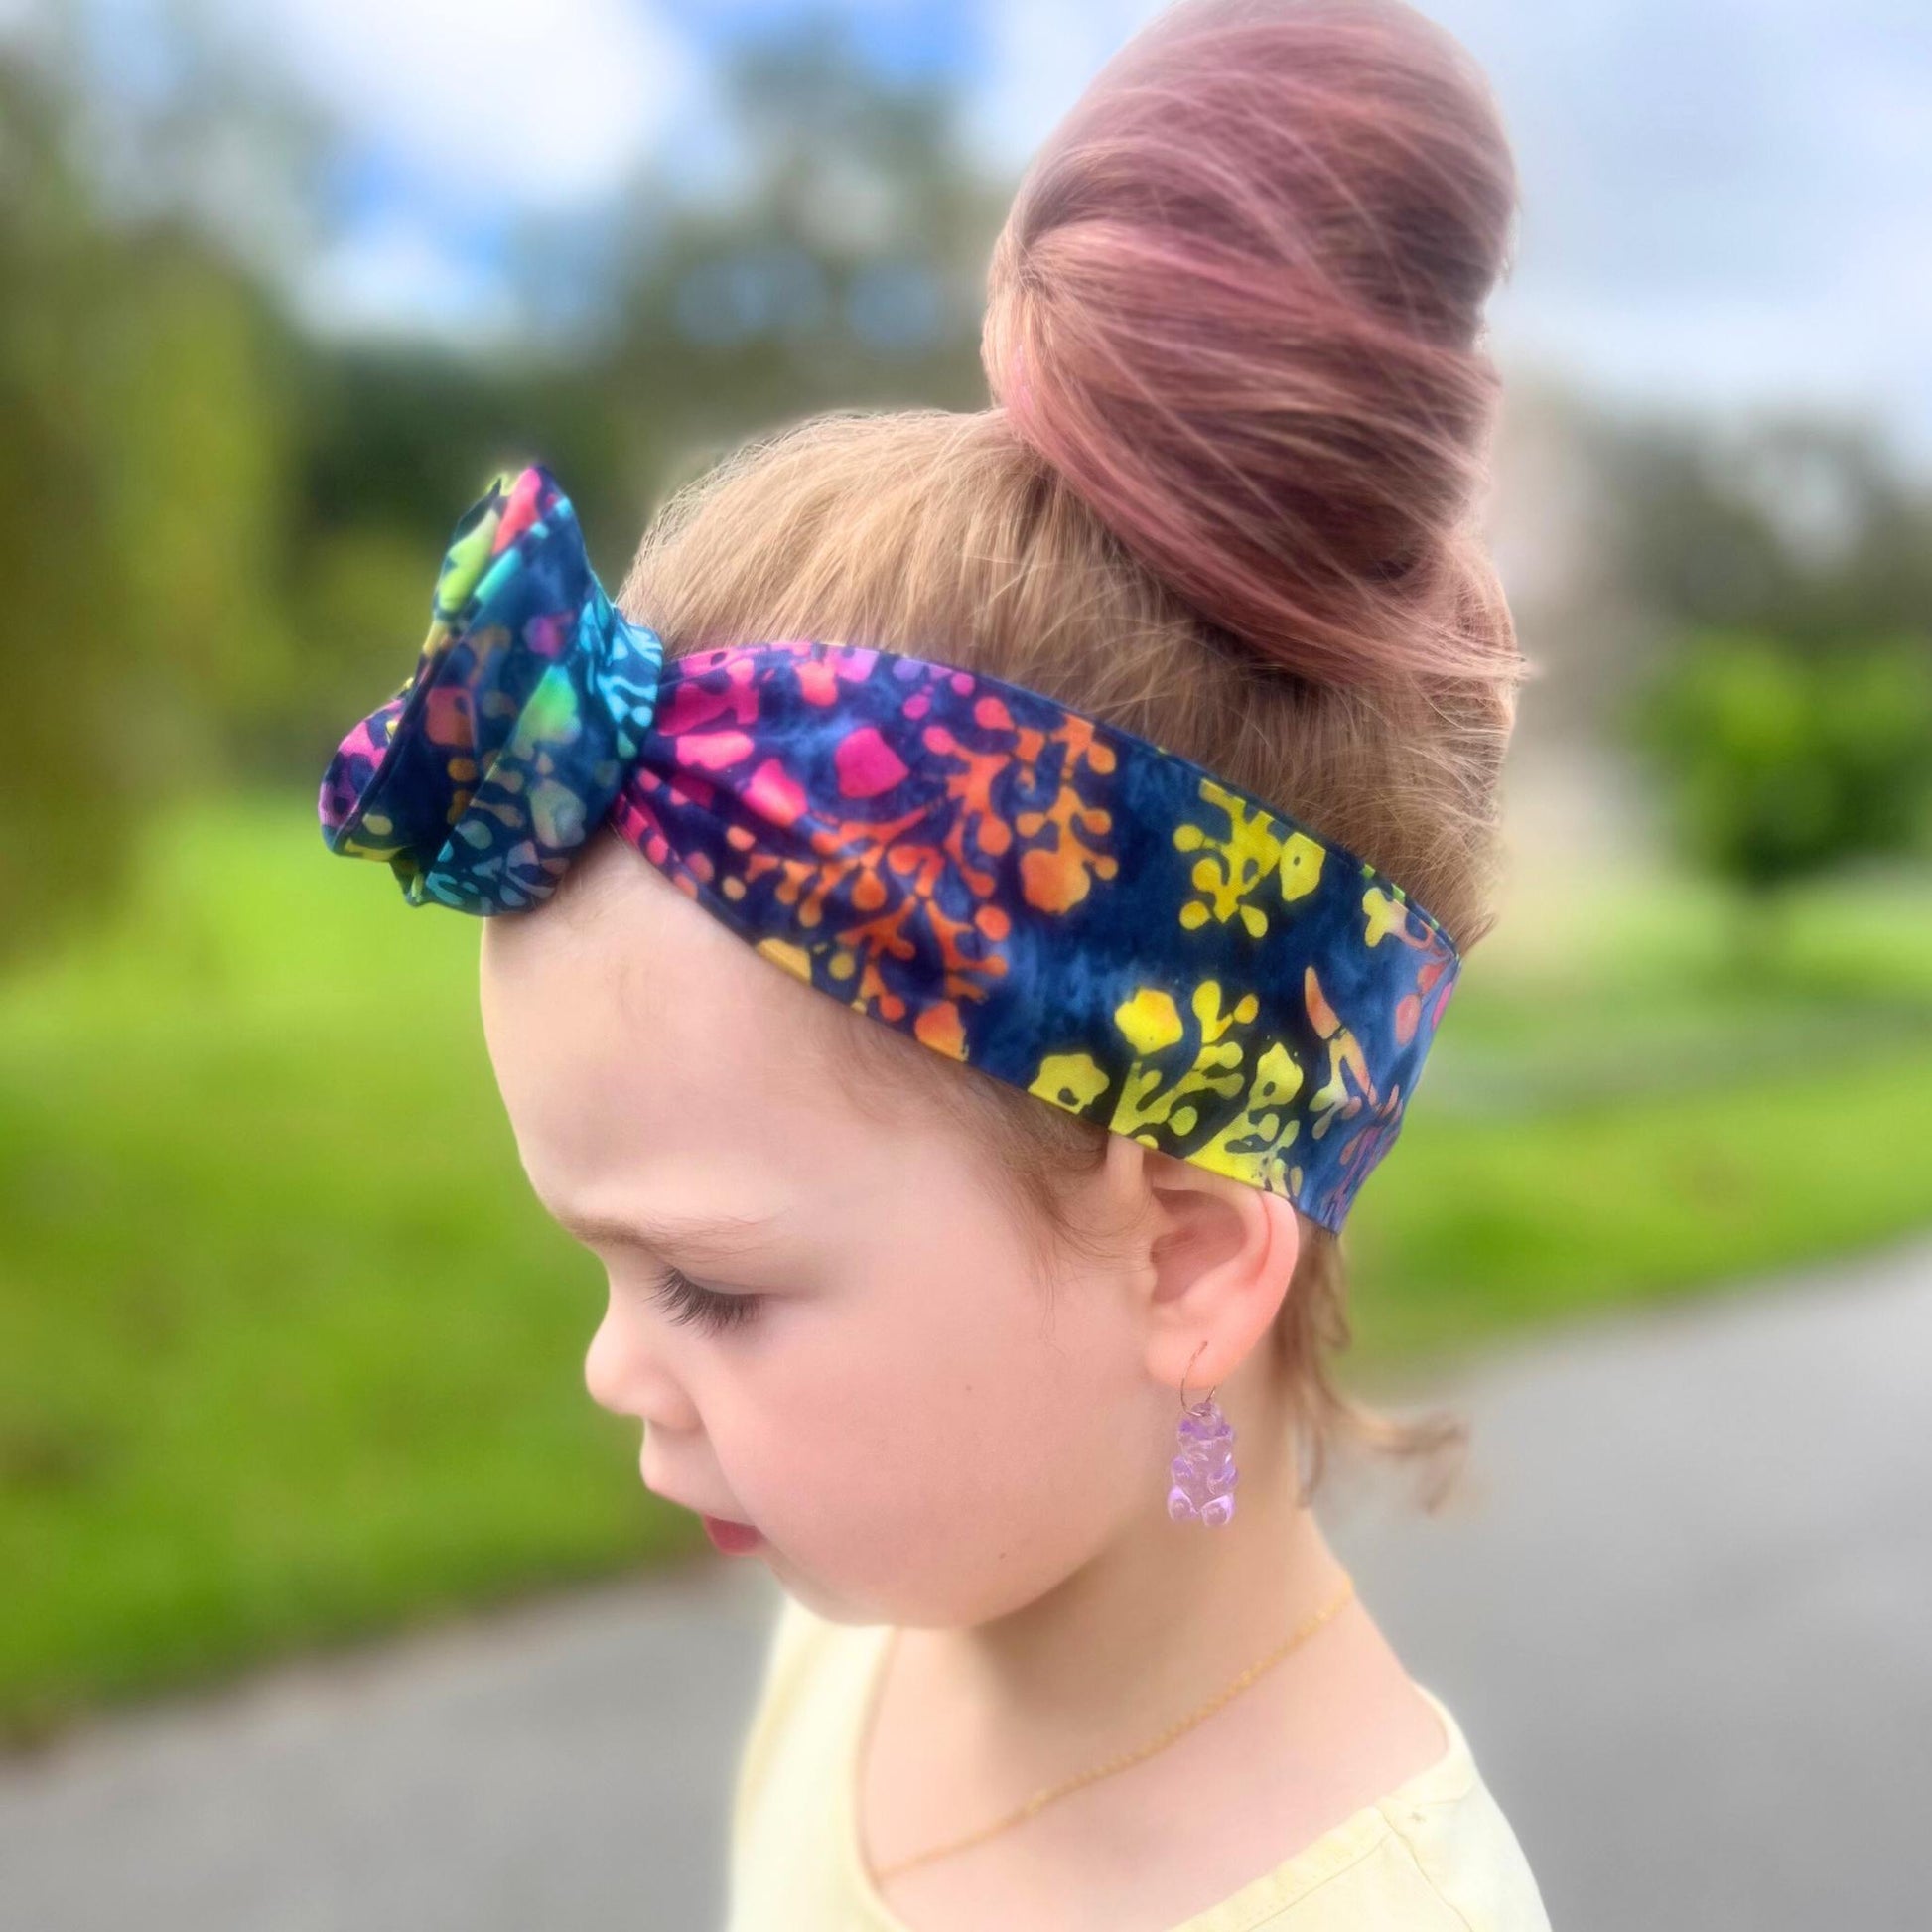 Kids Hair accessories, handmade in Australia